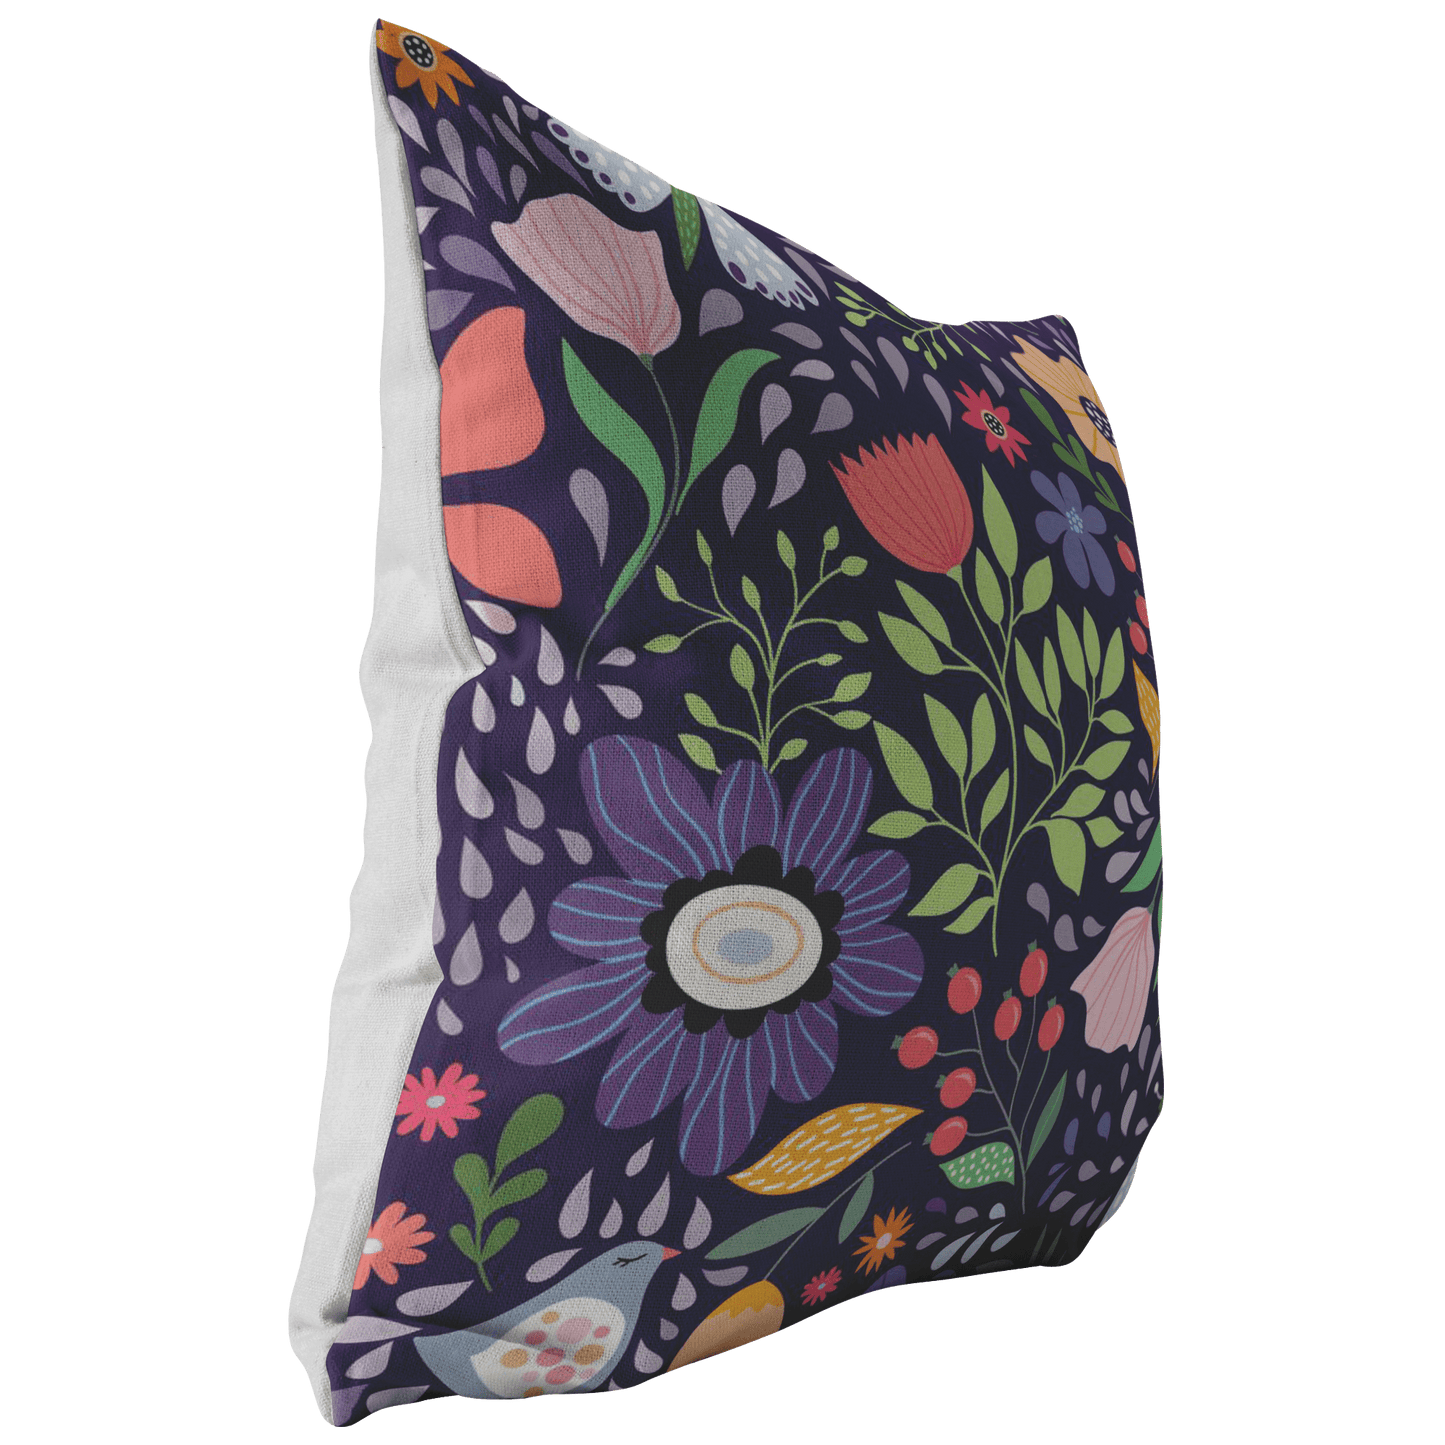 Flowers & Butterfly - Premium Pillow